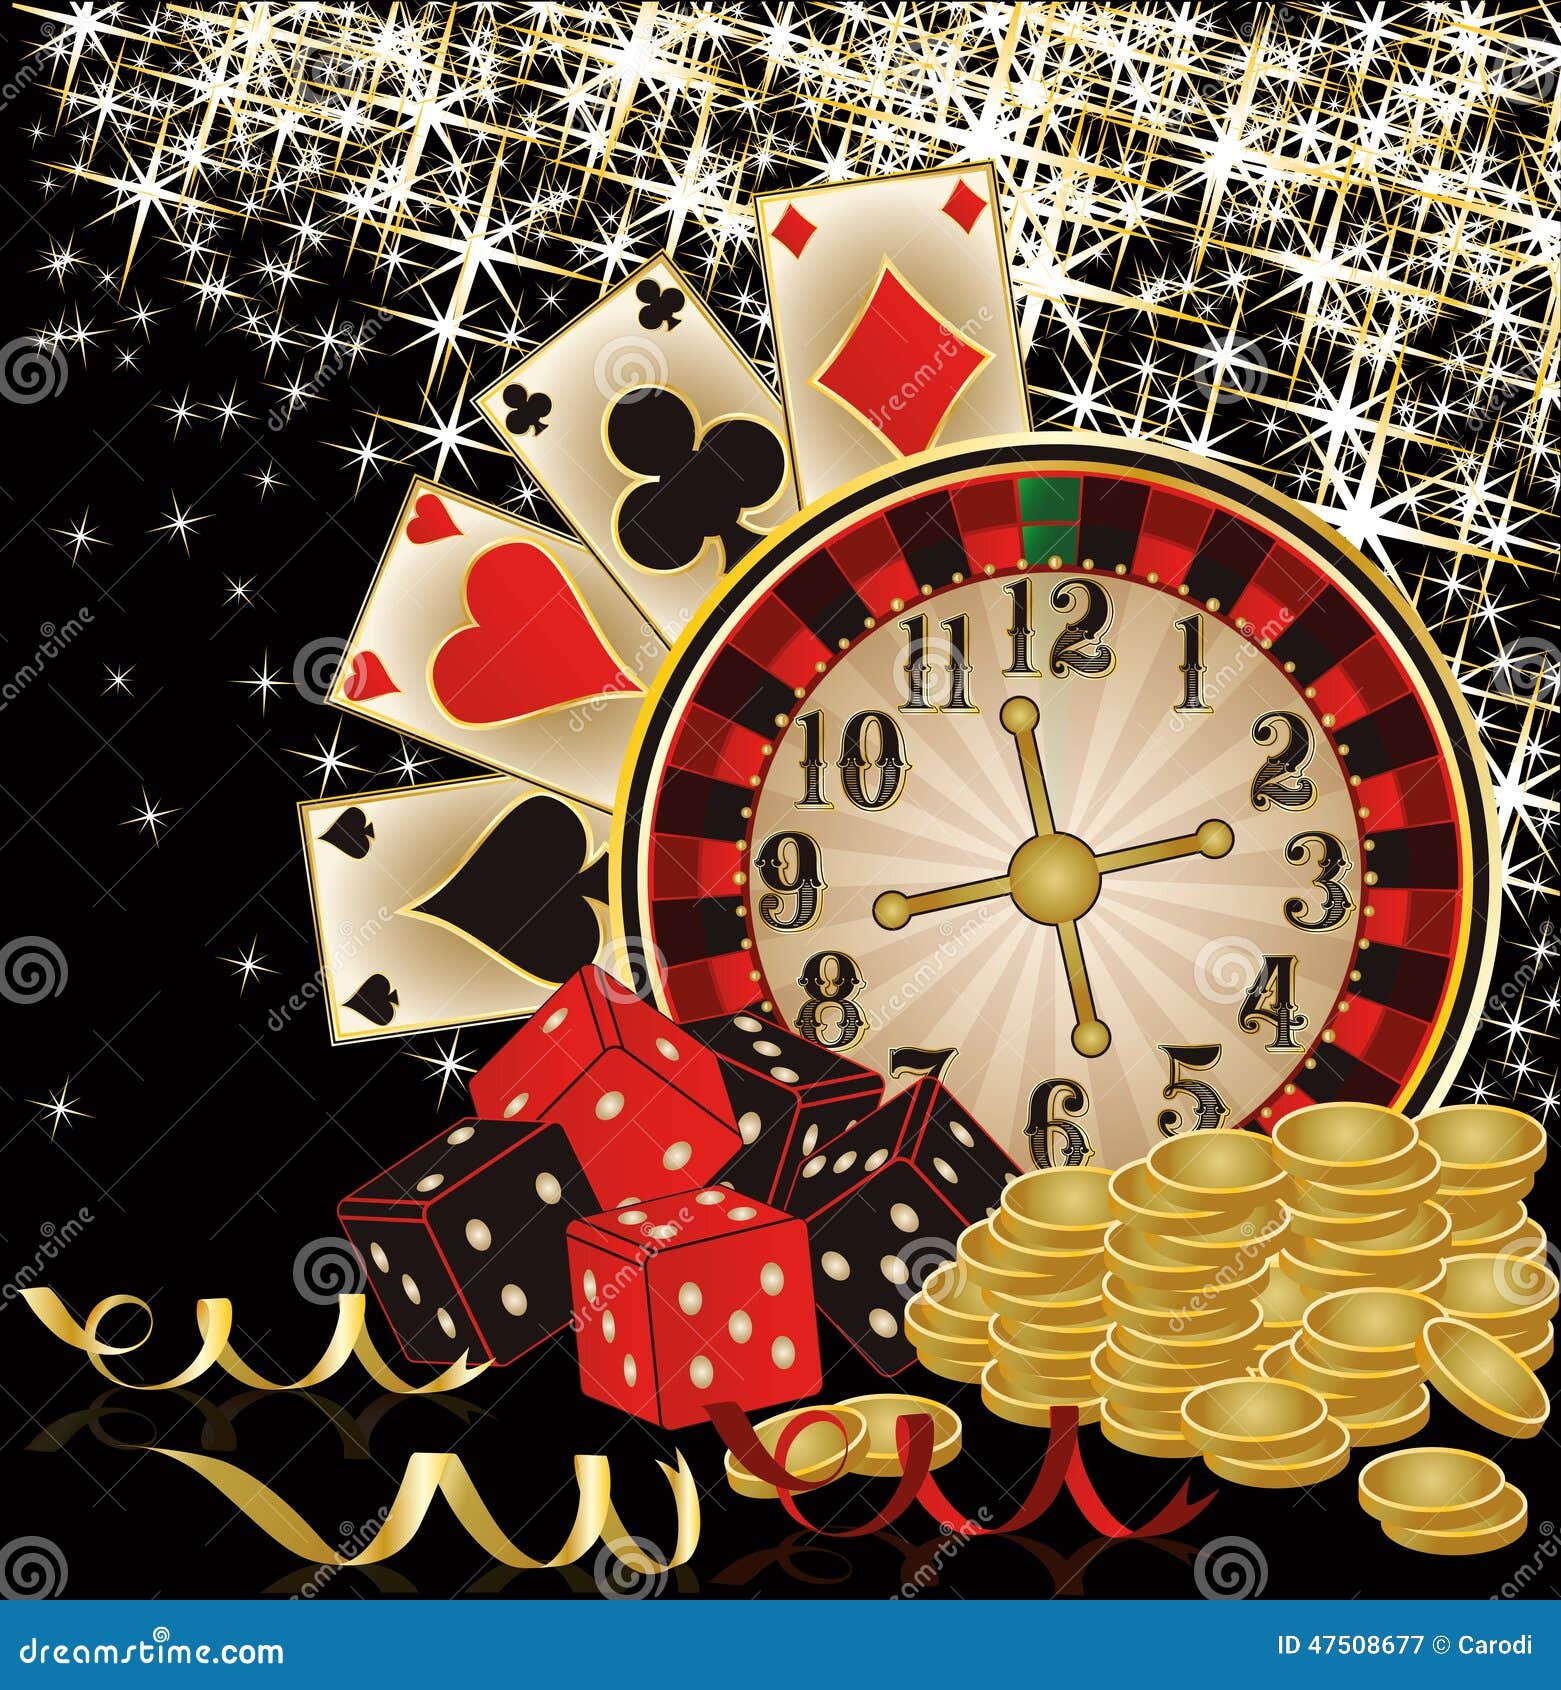 Merry Christmas Casino Wallpaper Stock Photo - Image: 47508677